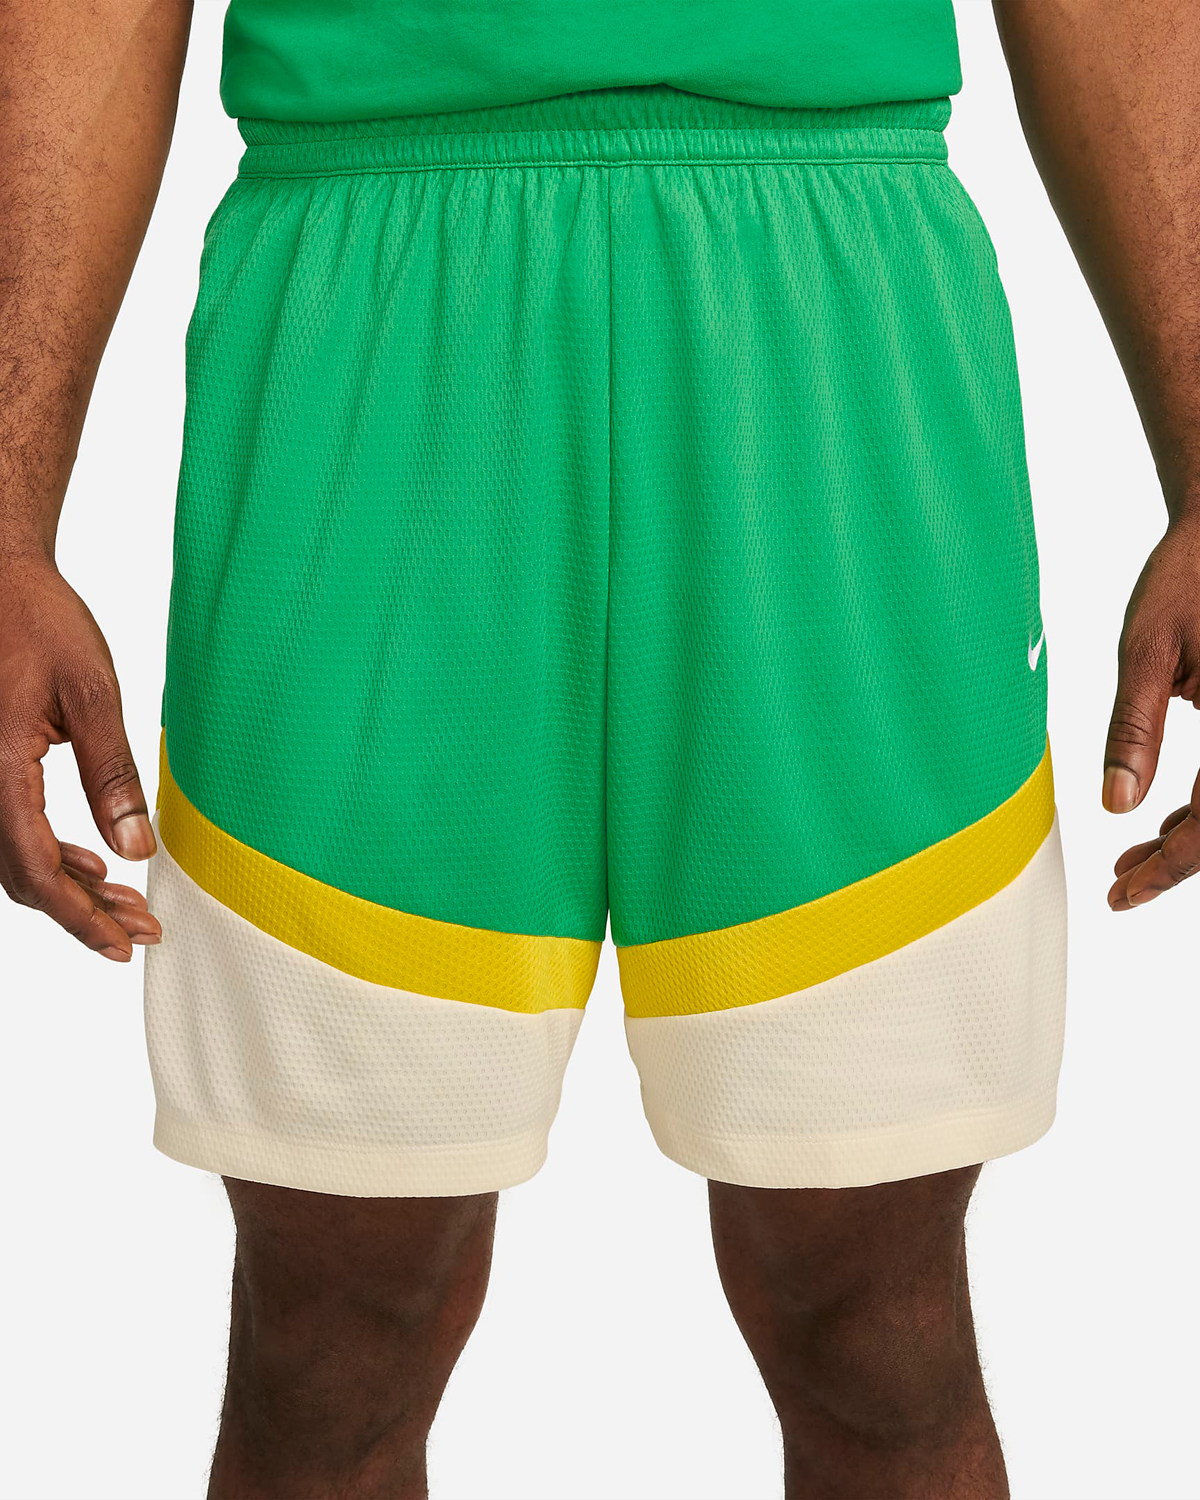 Nike-Icon-Basketball-Shorts-Stadium-Green-Speed-Yellow-2